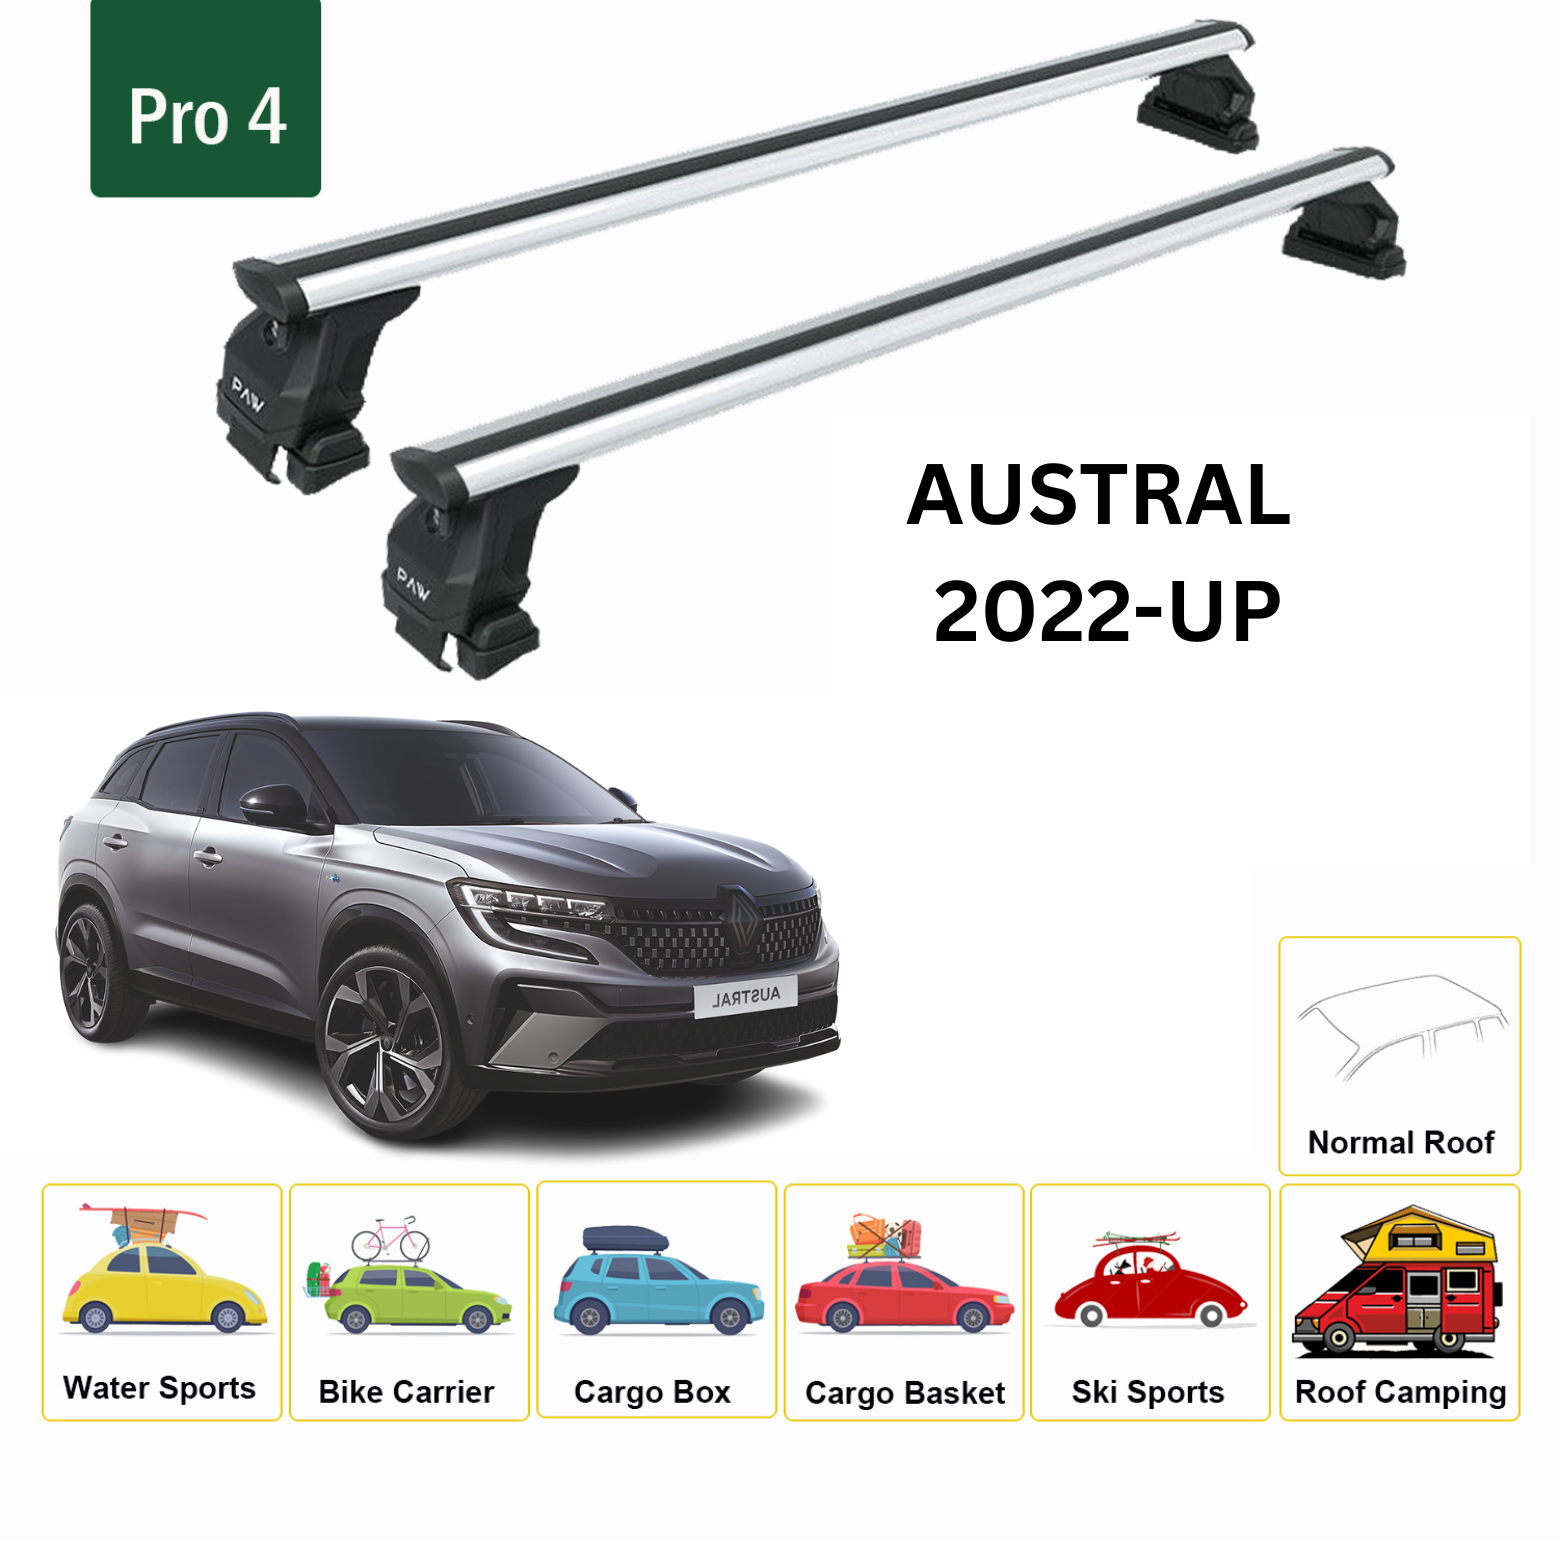 For Renault Austral 2022-Up Roof Rack System, Aluminium Cross Bar, Metal Bracket, Normal Roof, Silver